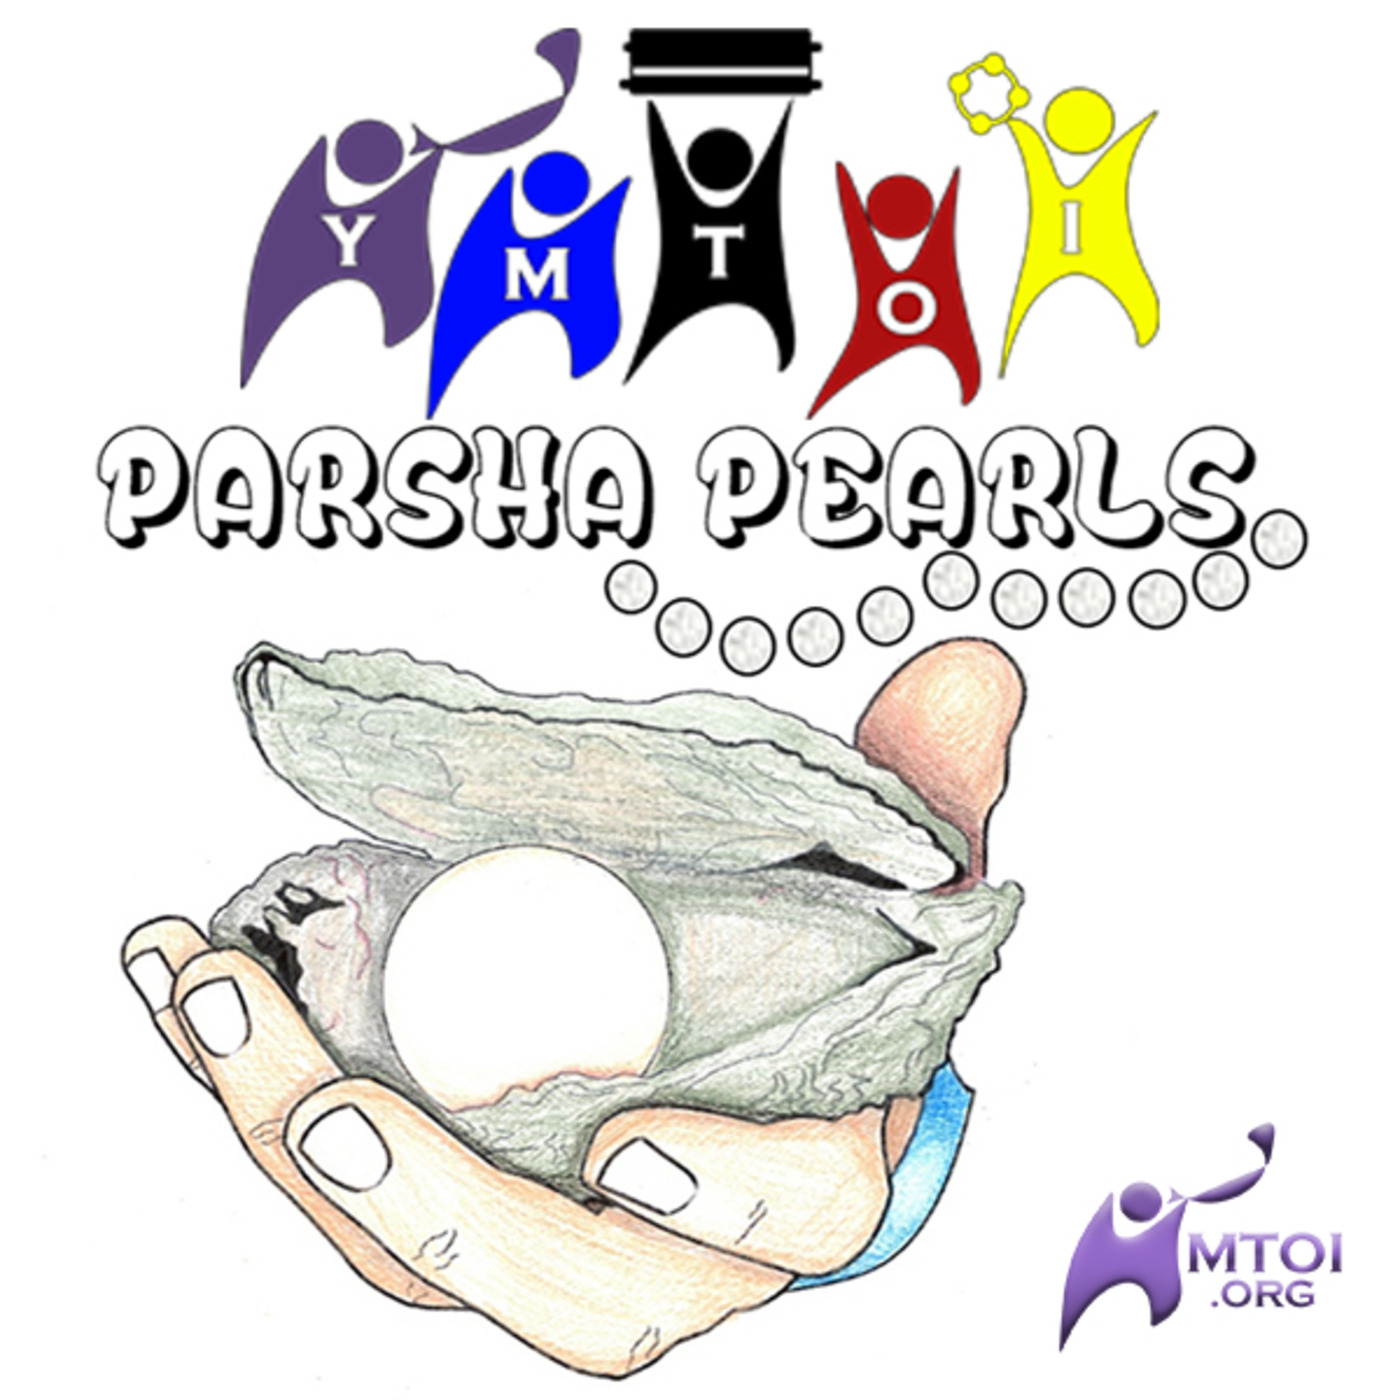 Episode 809: YMTOI Parsha Pearls Song for Shemot 13.2 - Mosheh and the Burning Bush